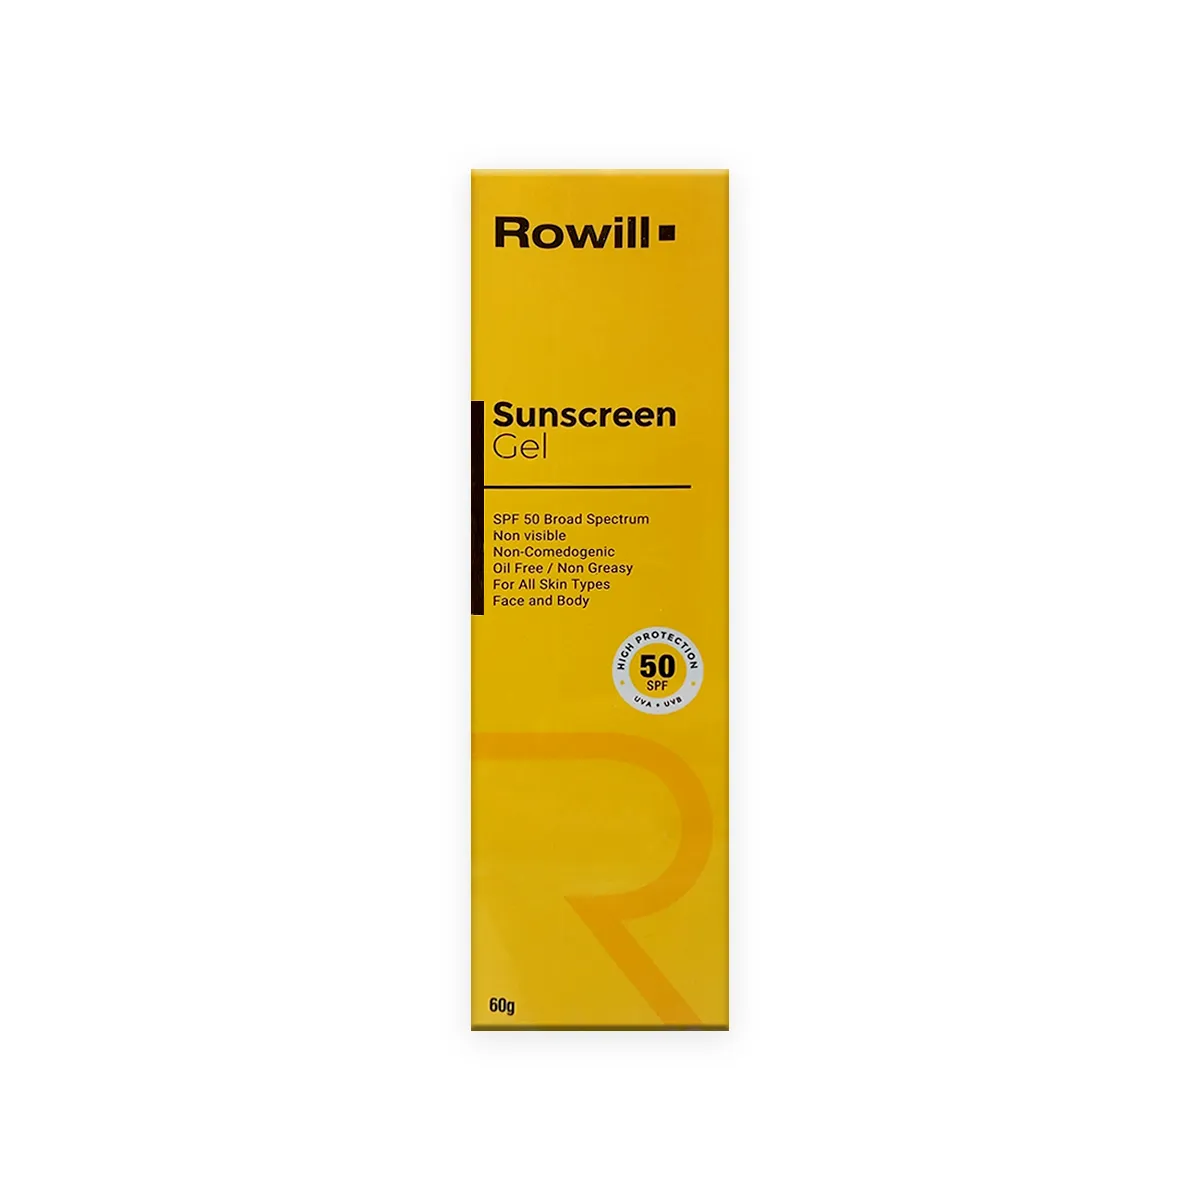 Rowill Sunscreen Gel 60g